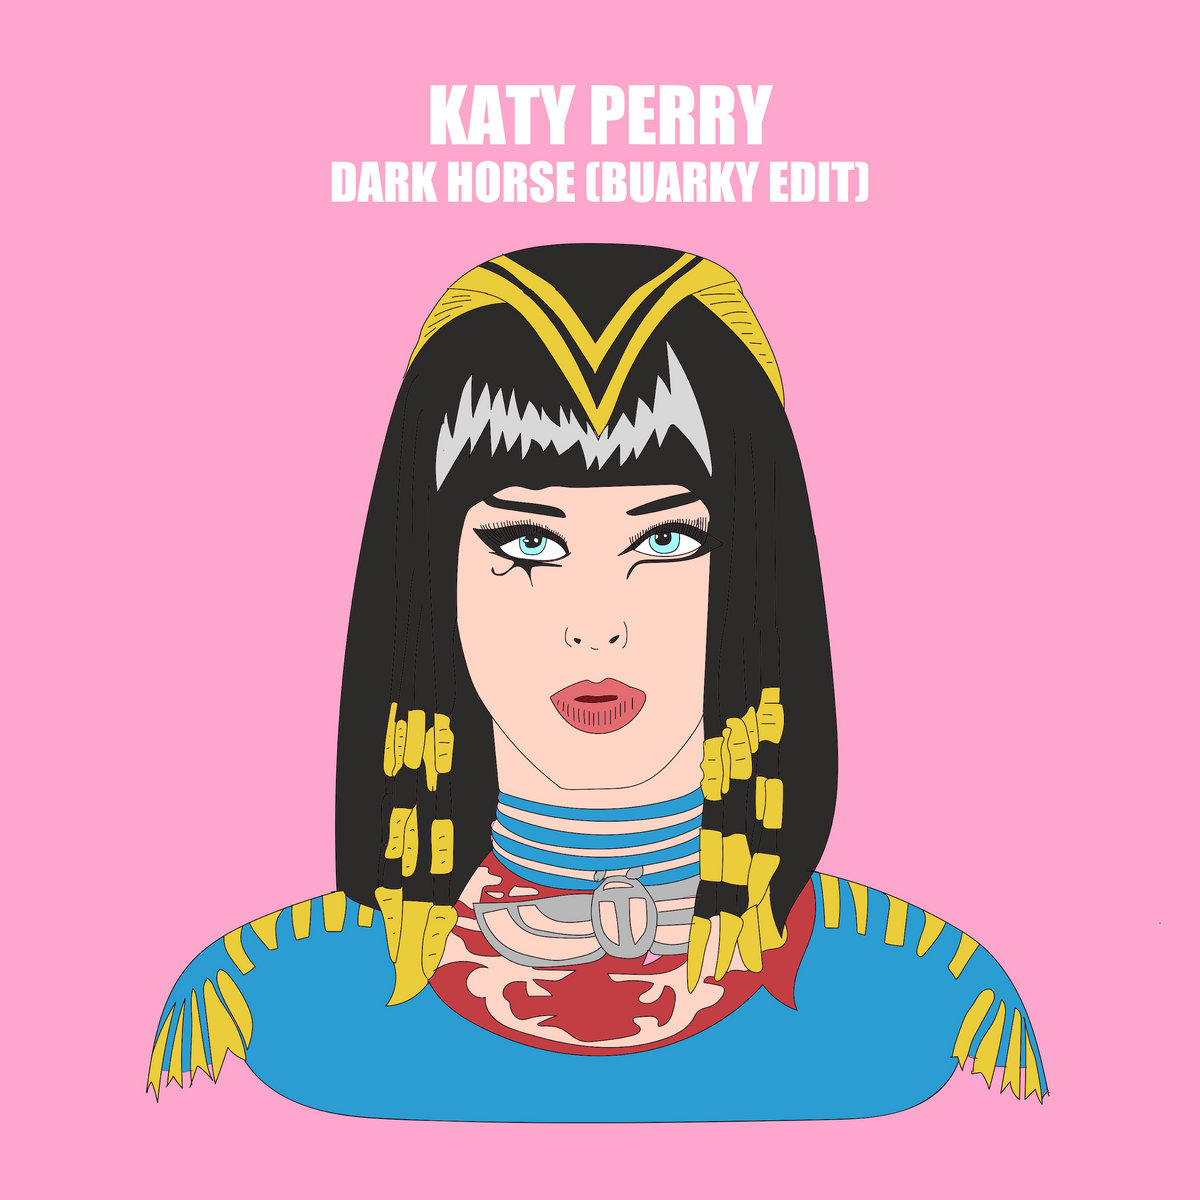 Dark horse katy perry feat juicy j. Кэти Перри дарк Хорс обложка. Katy Perry, juicy j - Dark Horse. Скриншот Кэти Перри темная лошадка. Девочка поет Dark Horse.